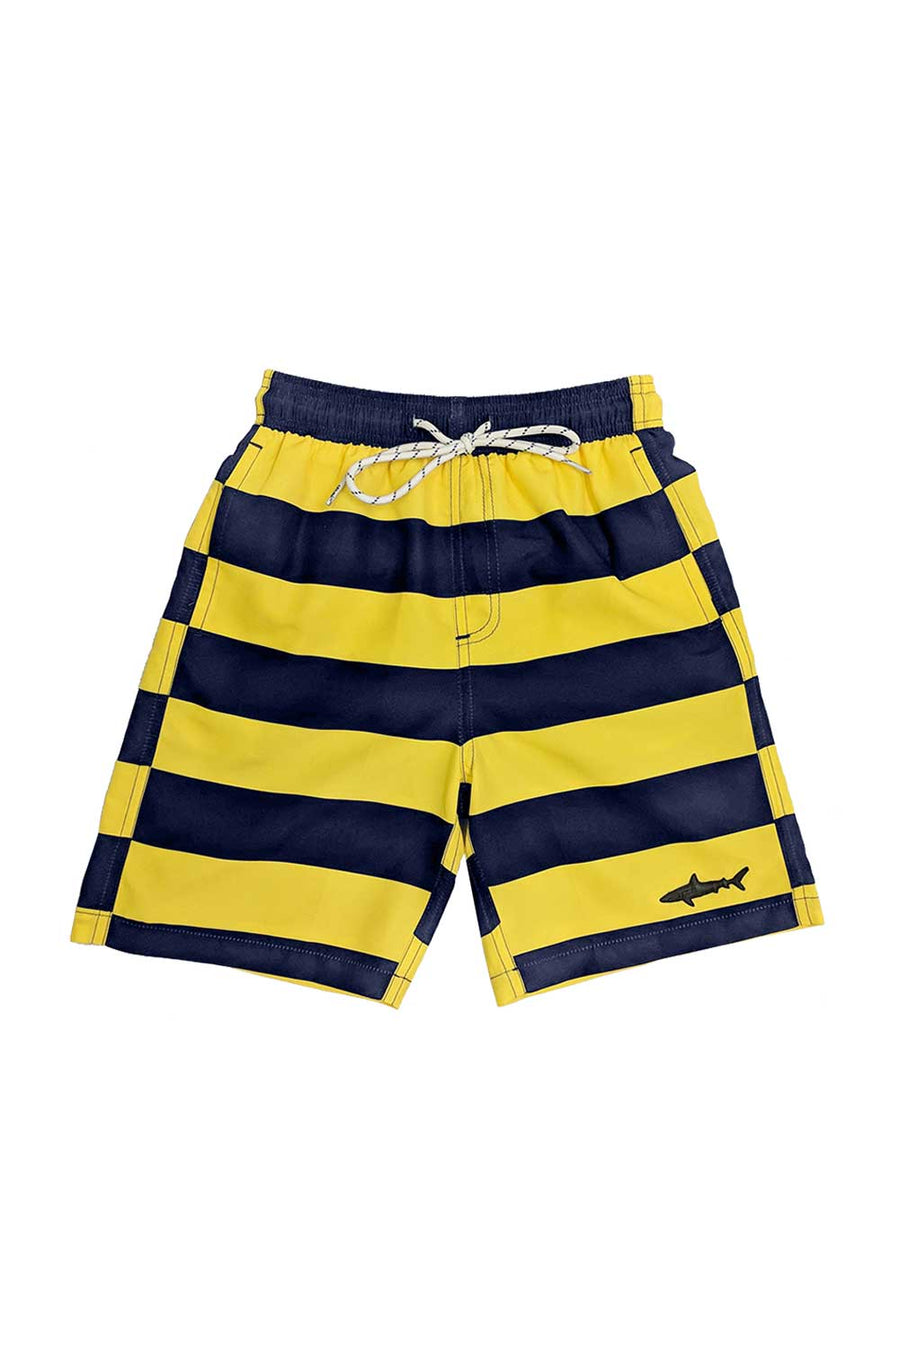 Kids Swim Shorts, Fast Dry Stripes Print - Vacay Land 